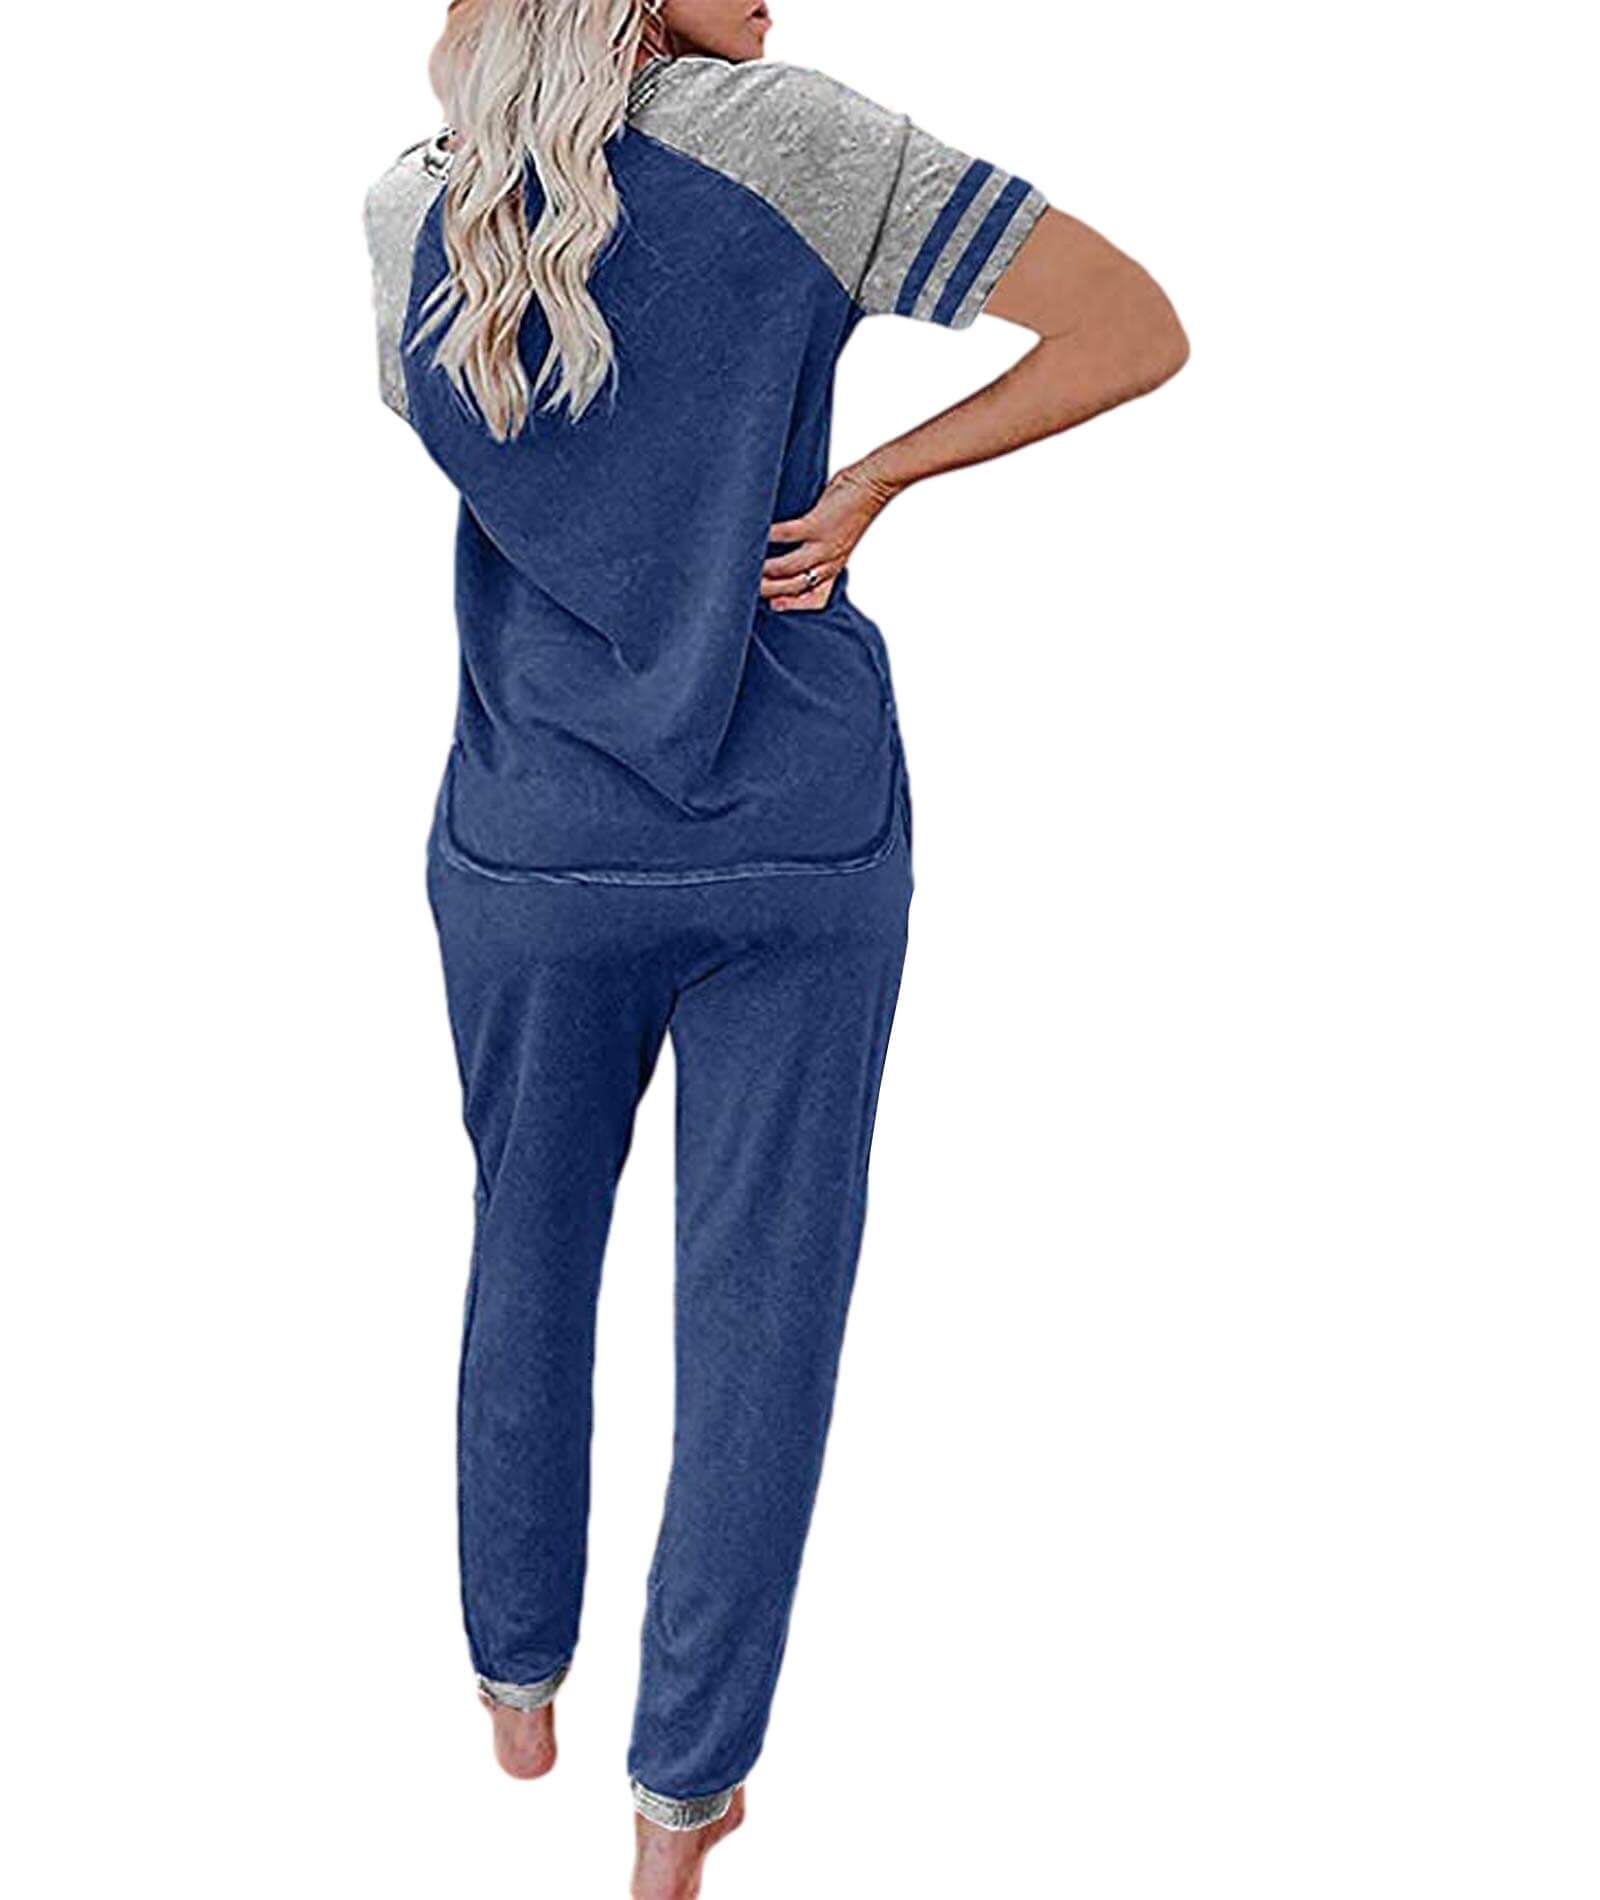  Women's Comfy Striped Letter Graphic Top Pants Sweatsuit Set Short Sleeves Sports Casual Shirts Sweatpants Suits